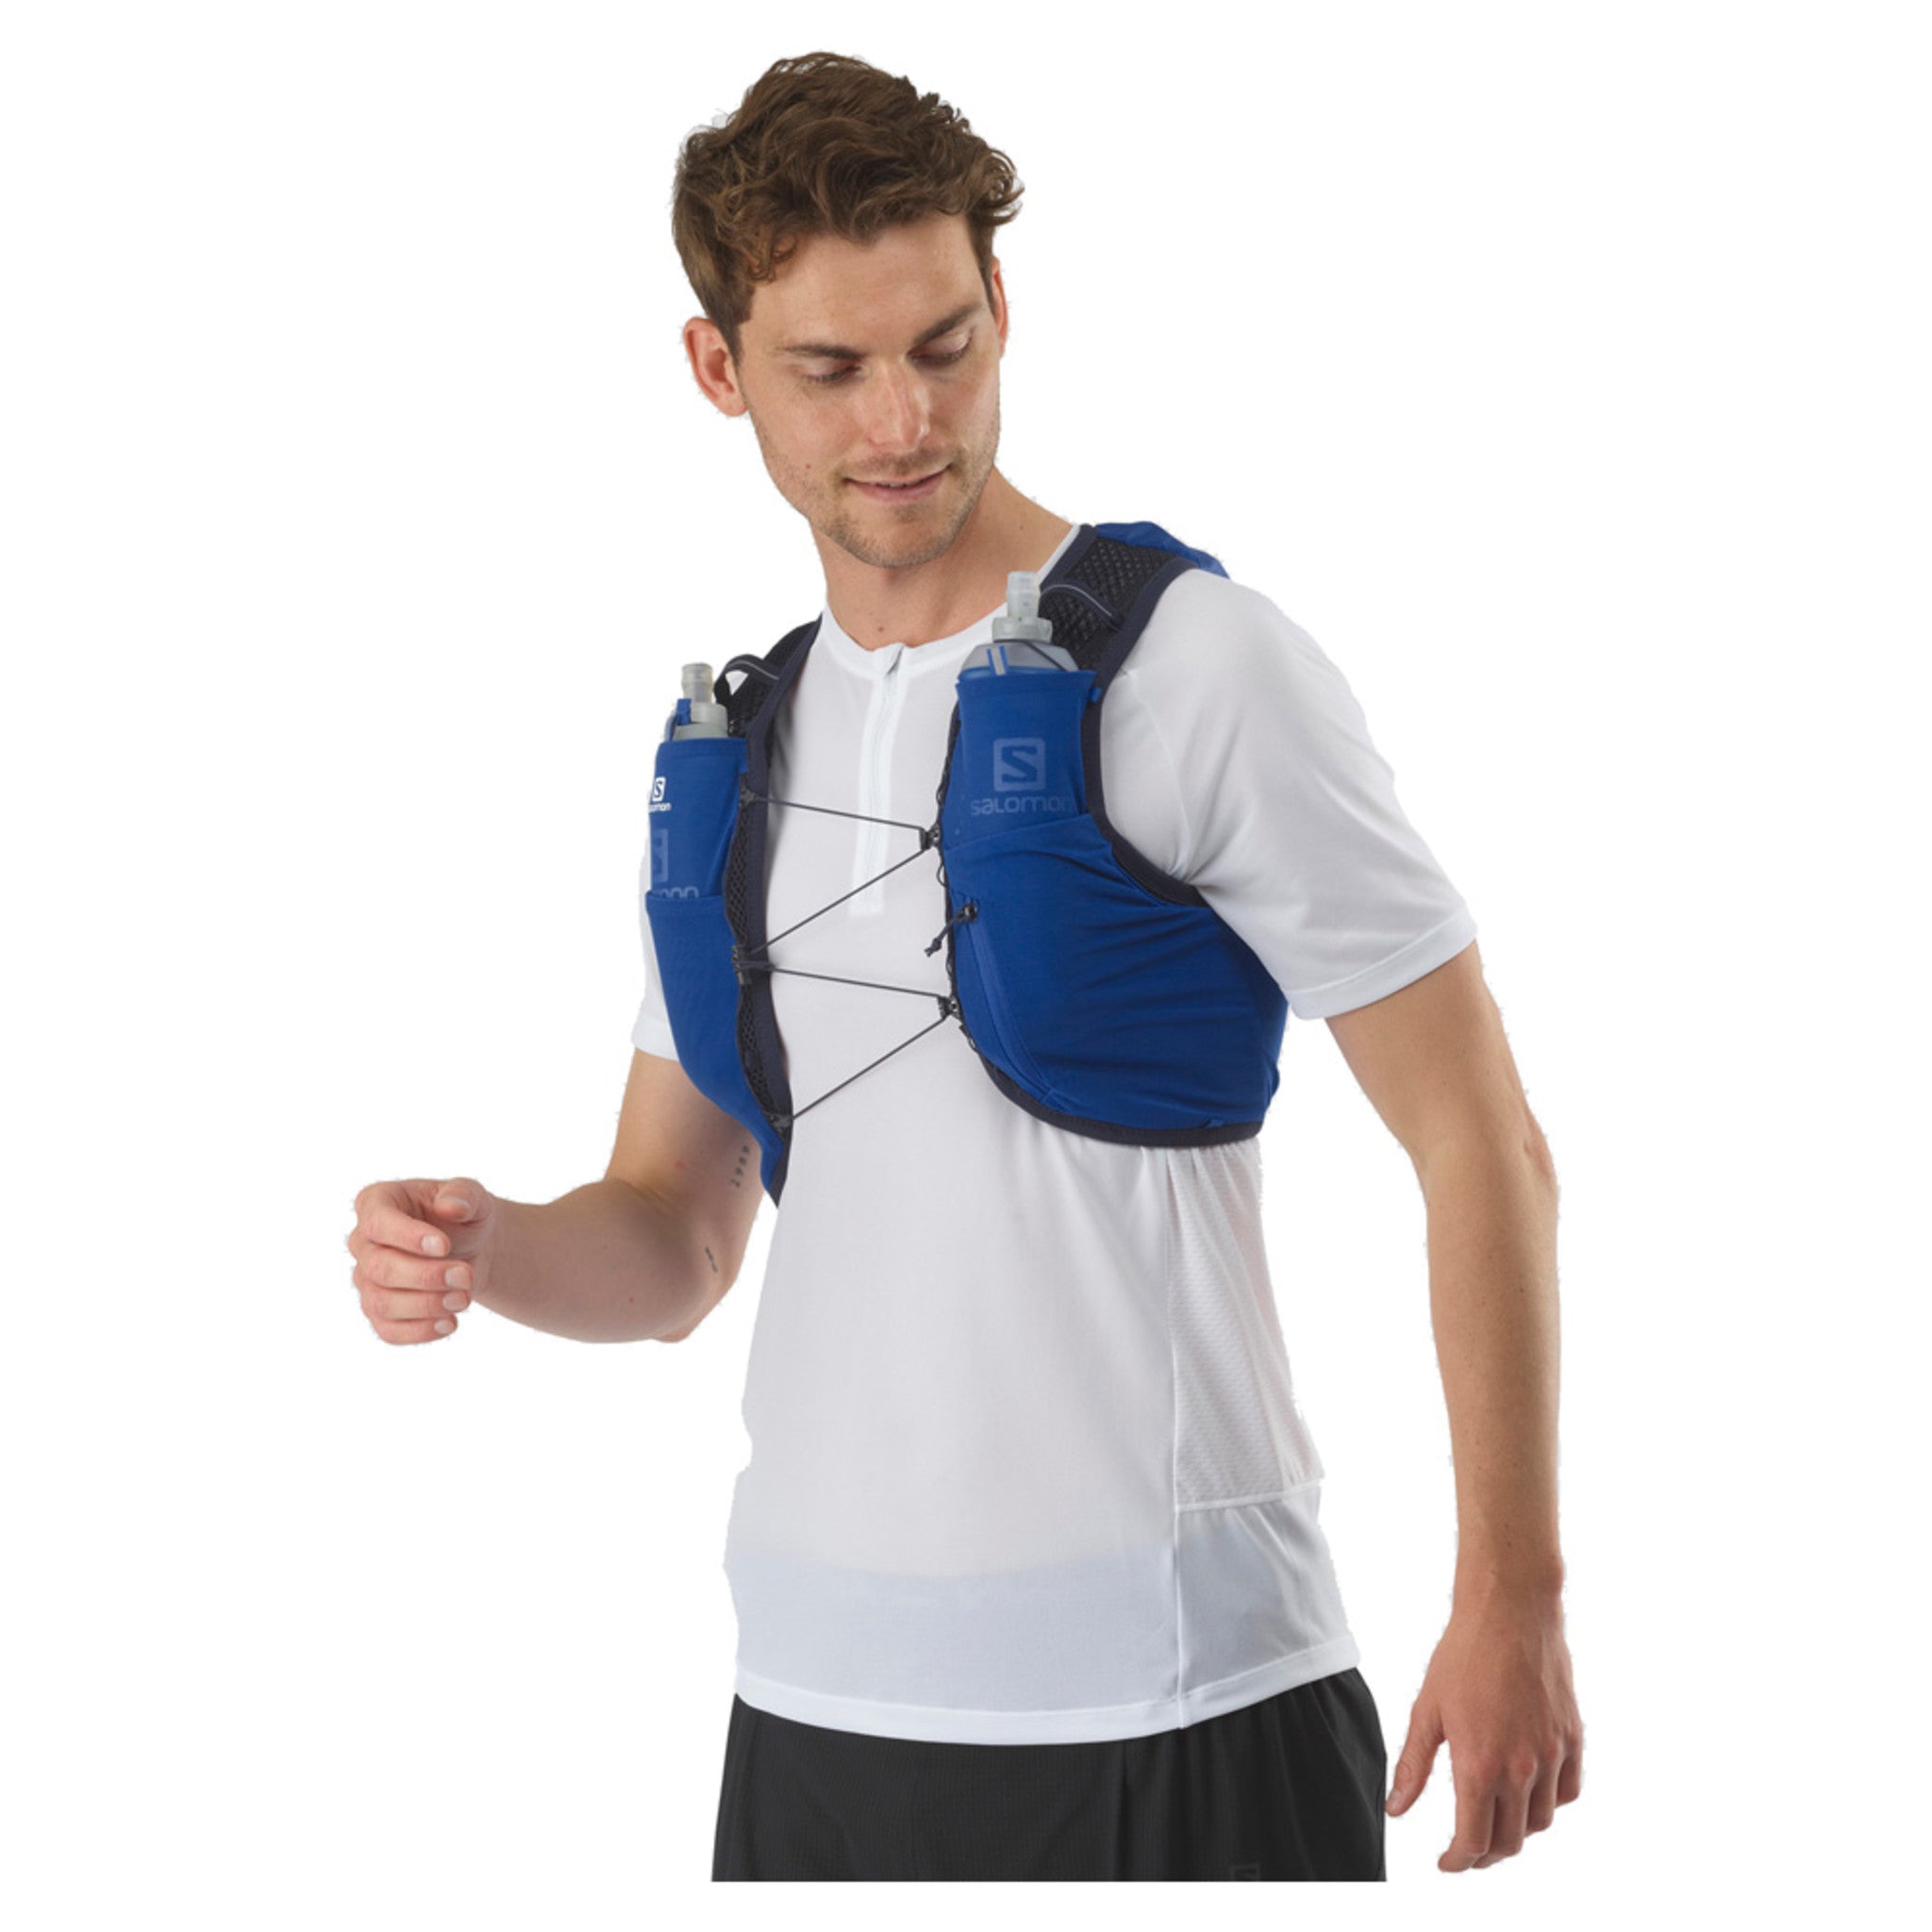 Salomon Active Skin 8 Set - Running vest, Free EU Delivery